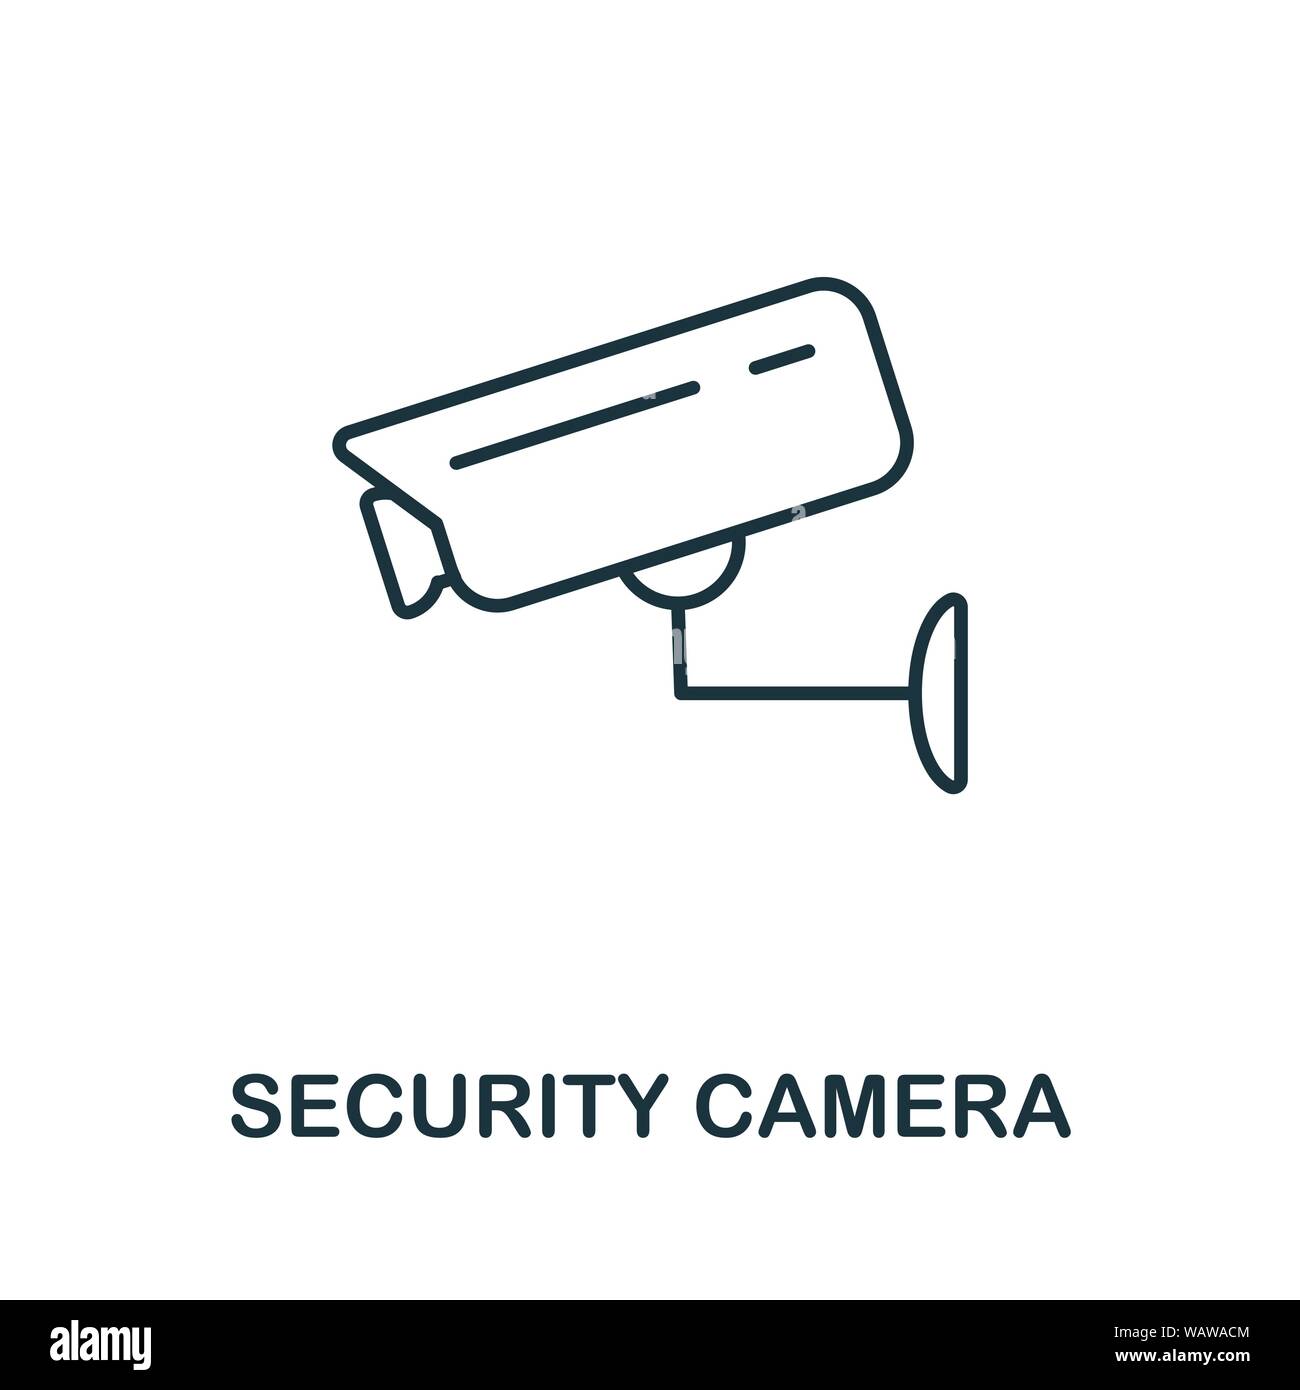 wawa security cameras